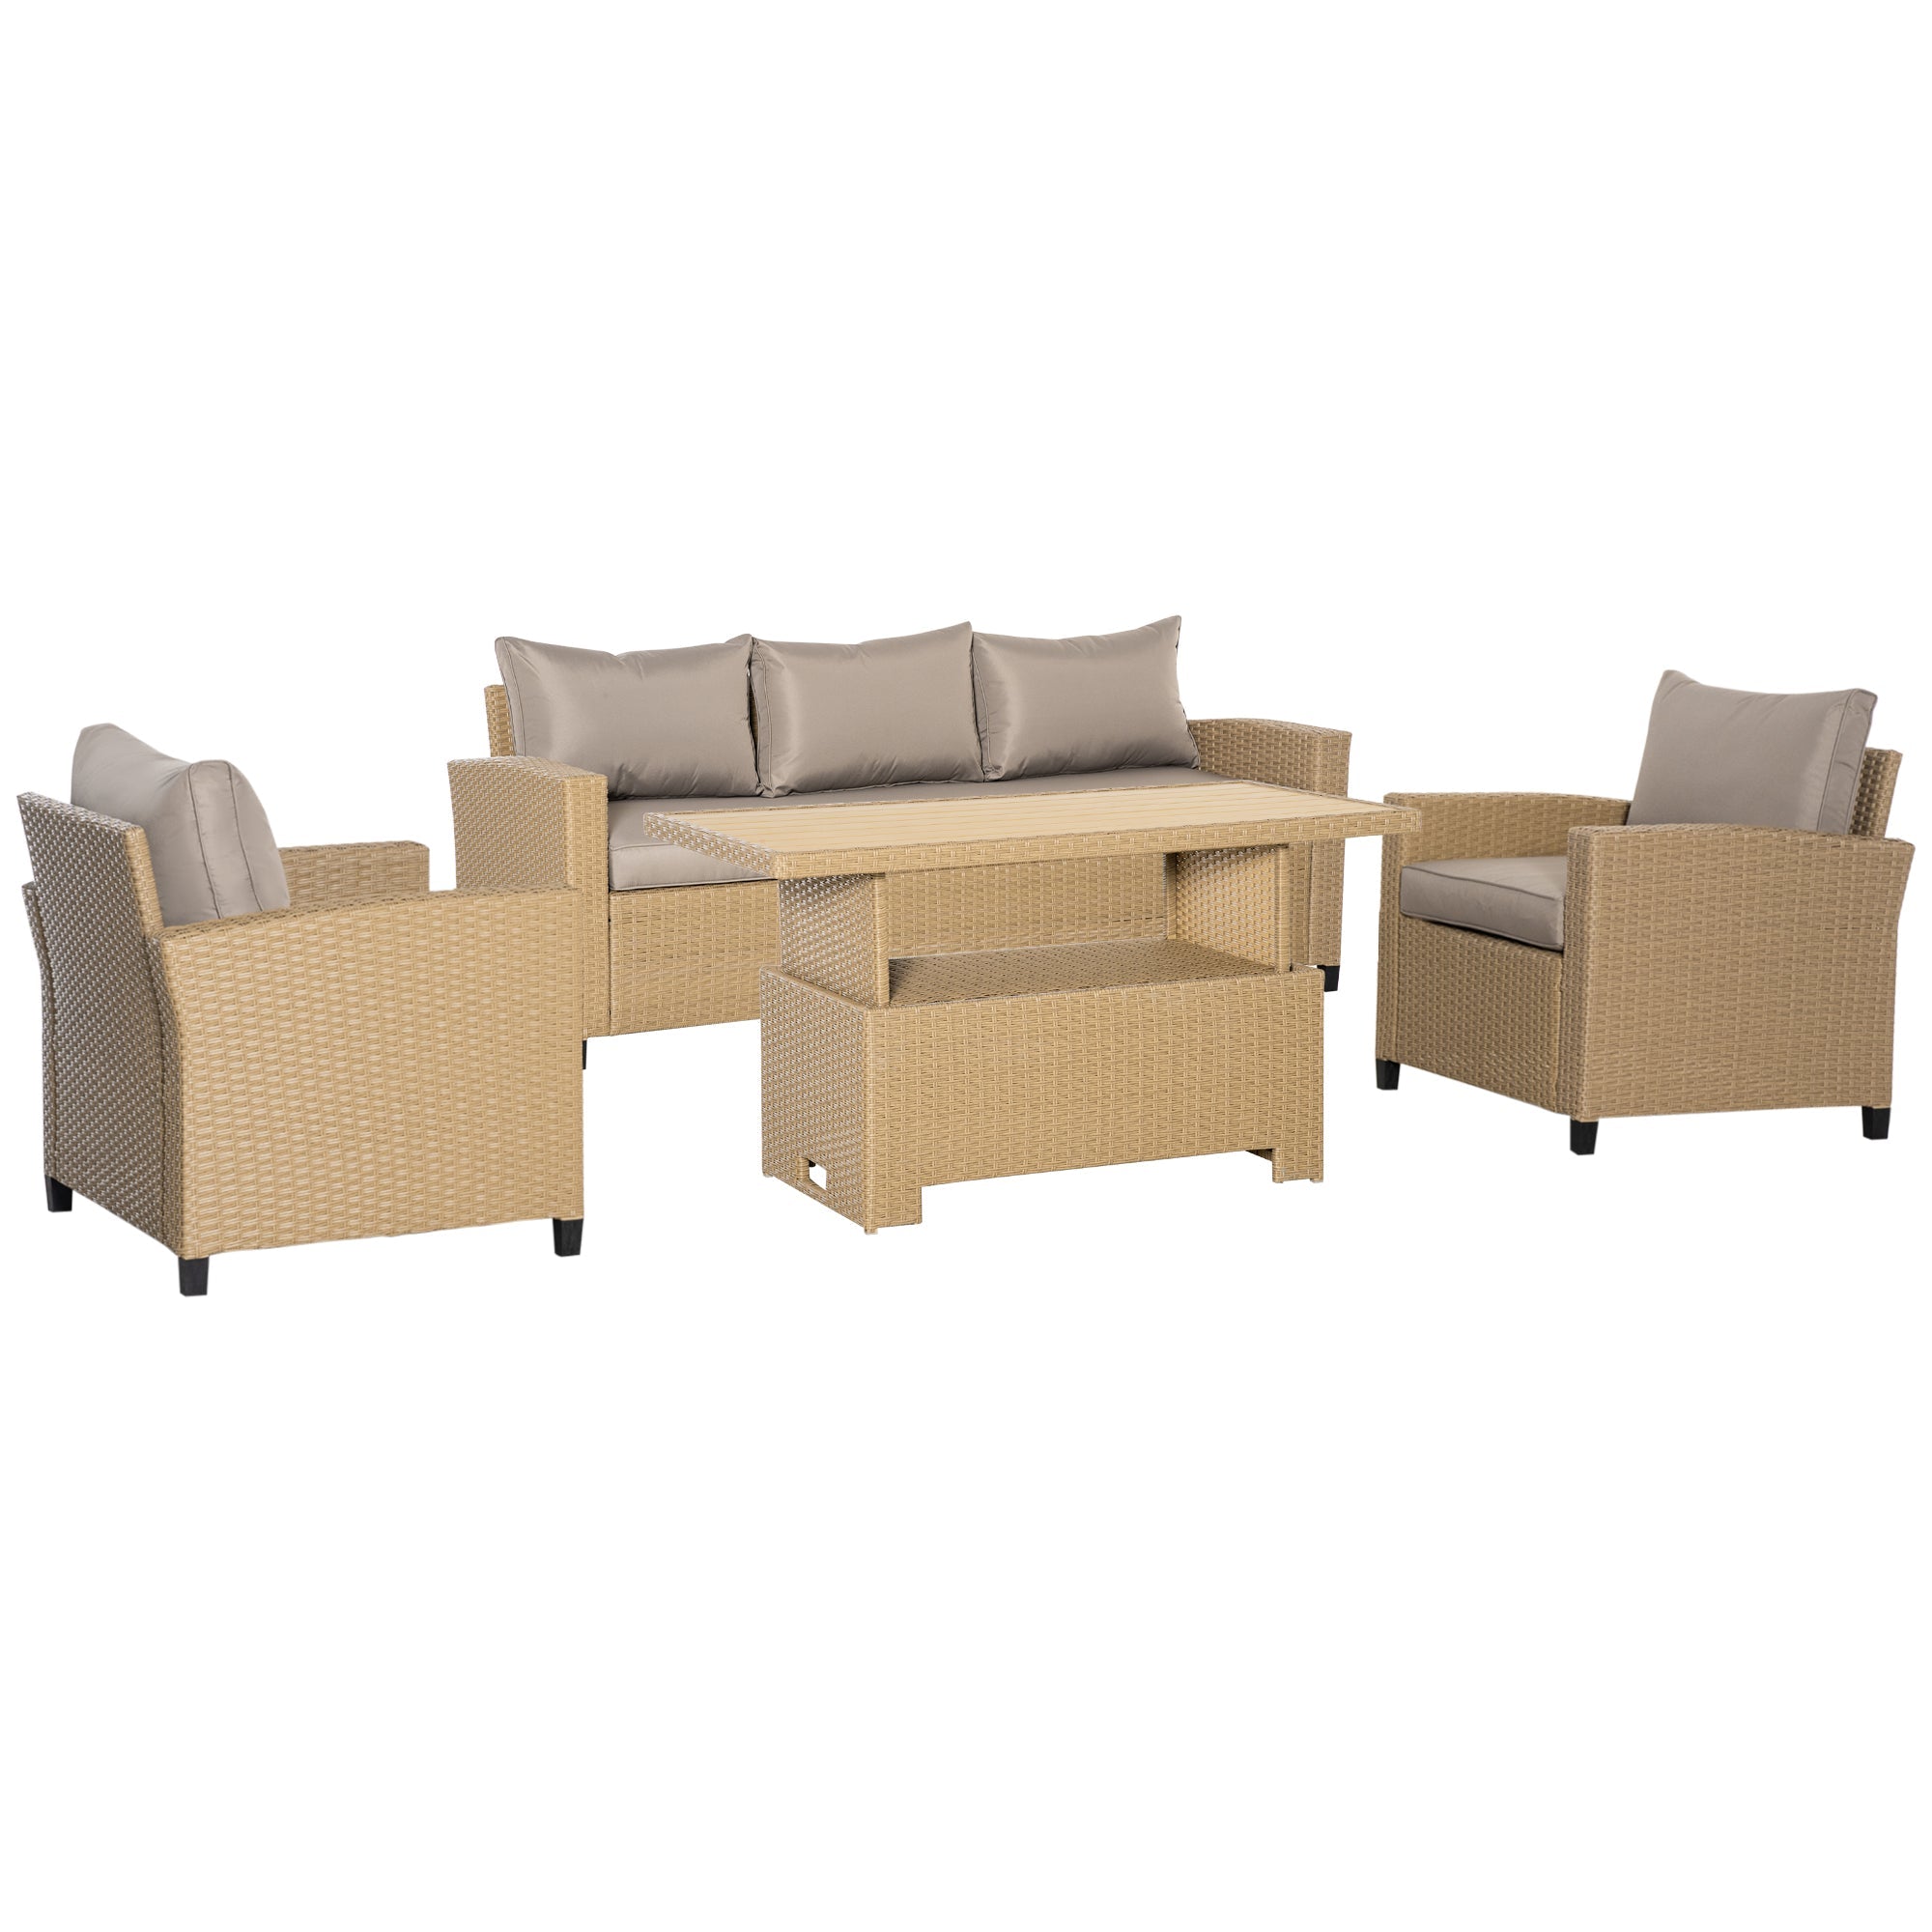 5-Seater Garden PE Rattan Sofa Set, Patio Wicker Aluminium Frame Conversation w/ Wood Grain Plastic Table, Khaki-0